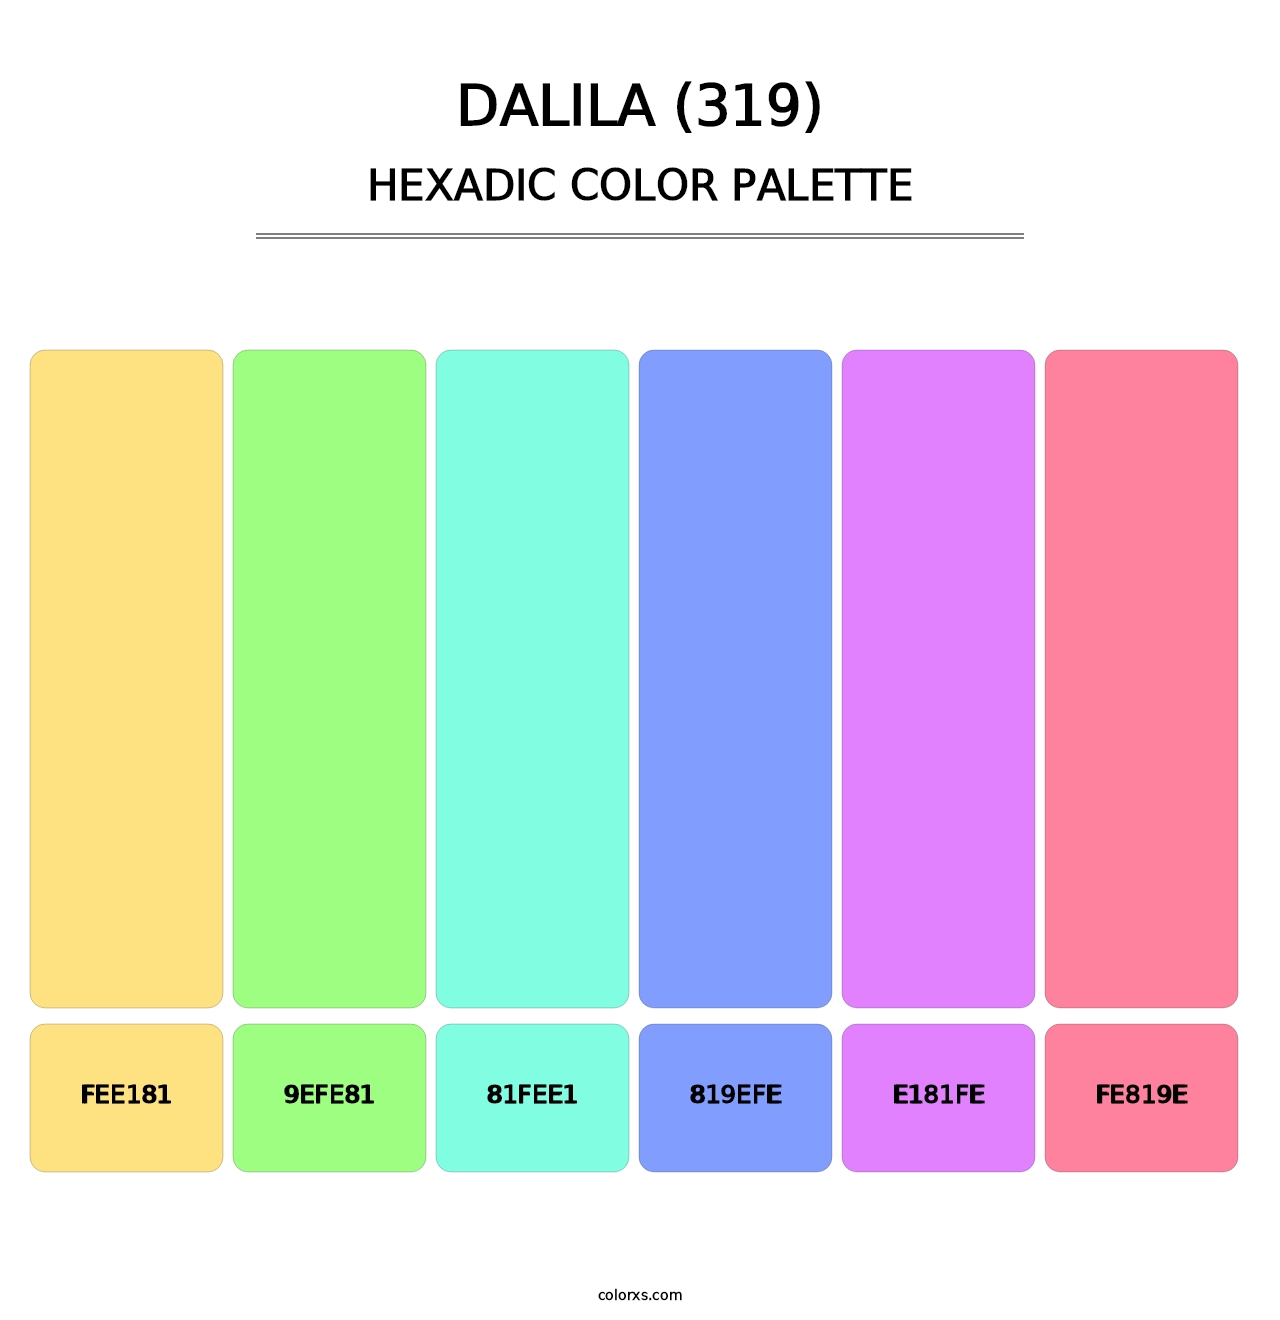 Dalila (319) - Hexadic Color Palette